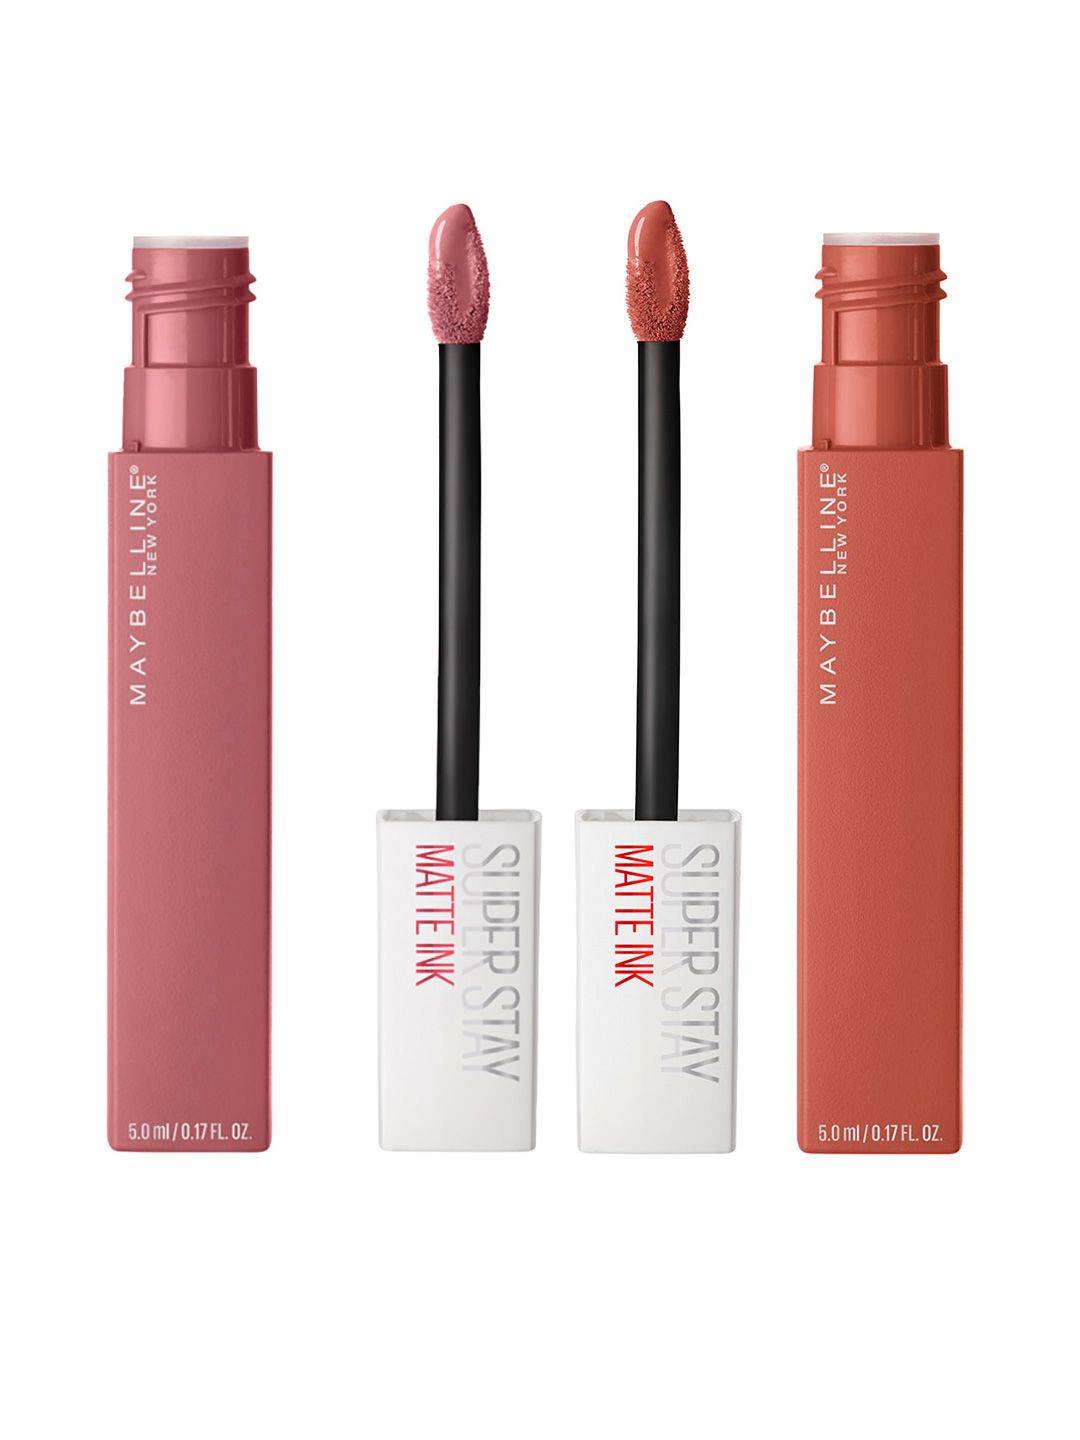 Maybelline Set of 2 New York Super Stay Matte Ink Liquid Lipsticks - 130 & 70 Price in India